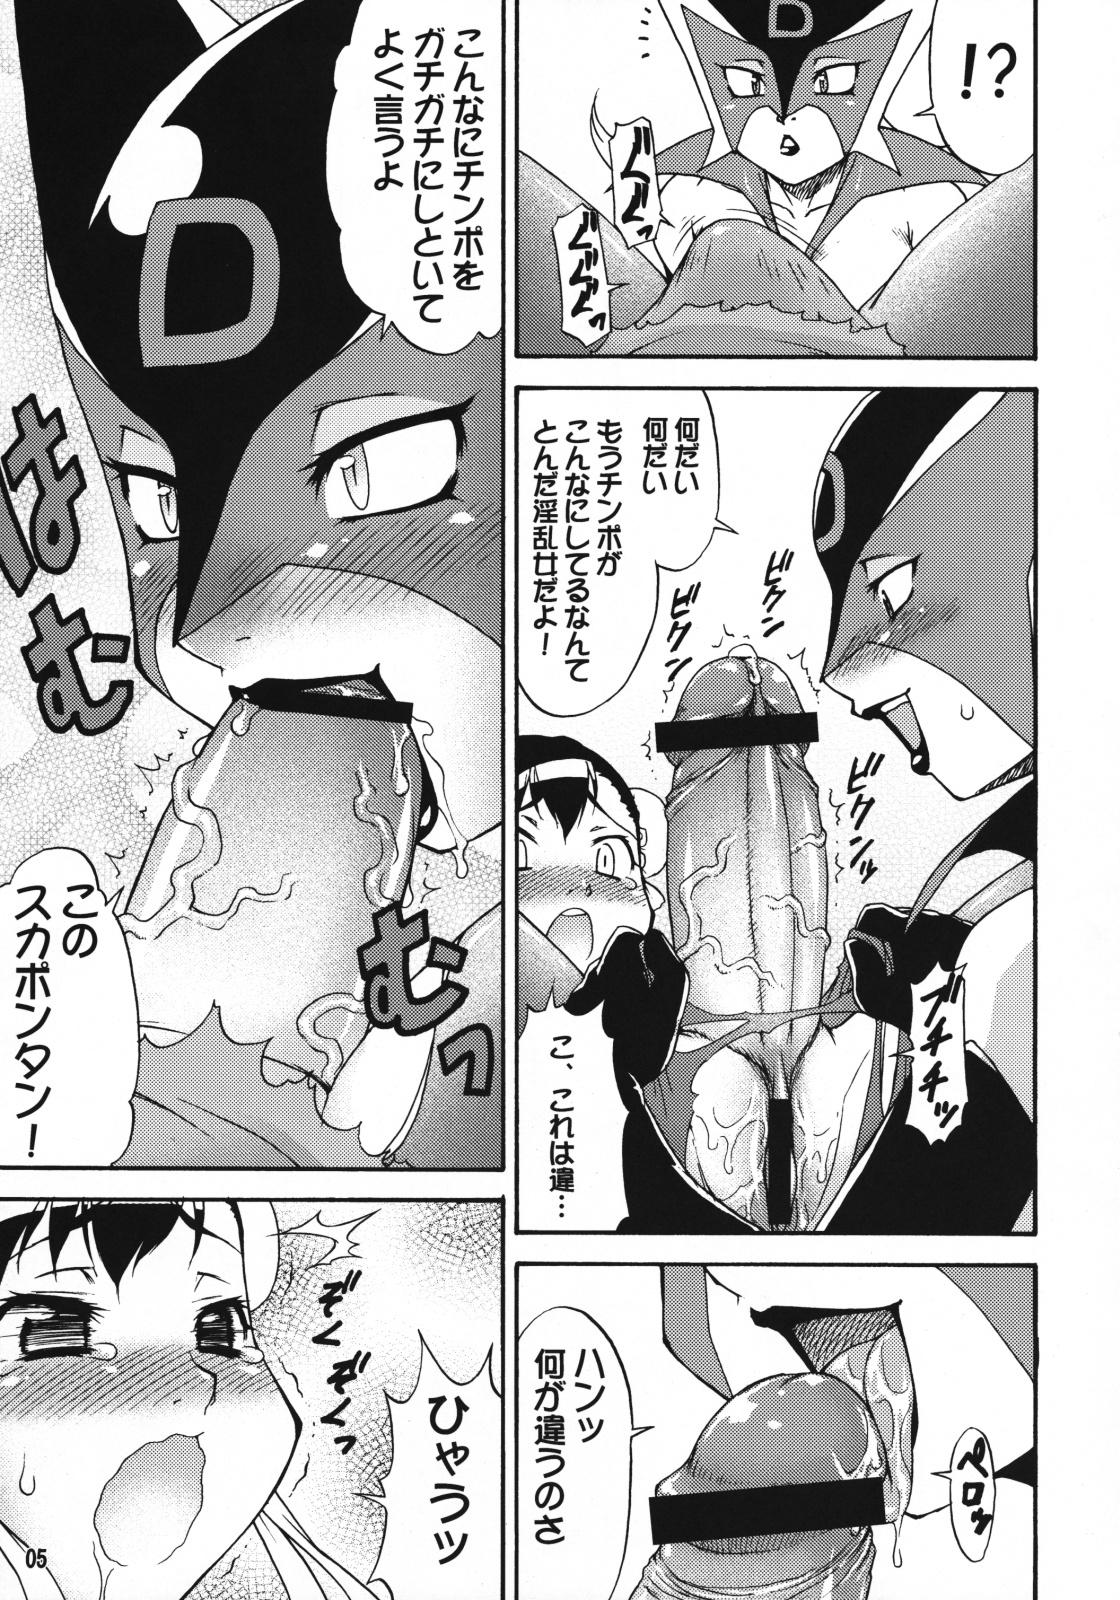 Uncensored Mikawa Ondo 6 - Street fighter Darkstalkers Princess crown Cyberbots Yatterman Step - Page 4